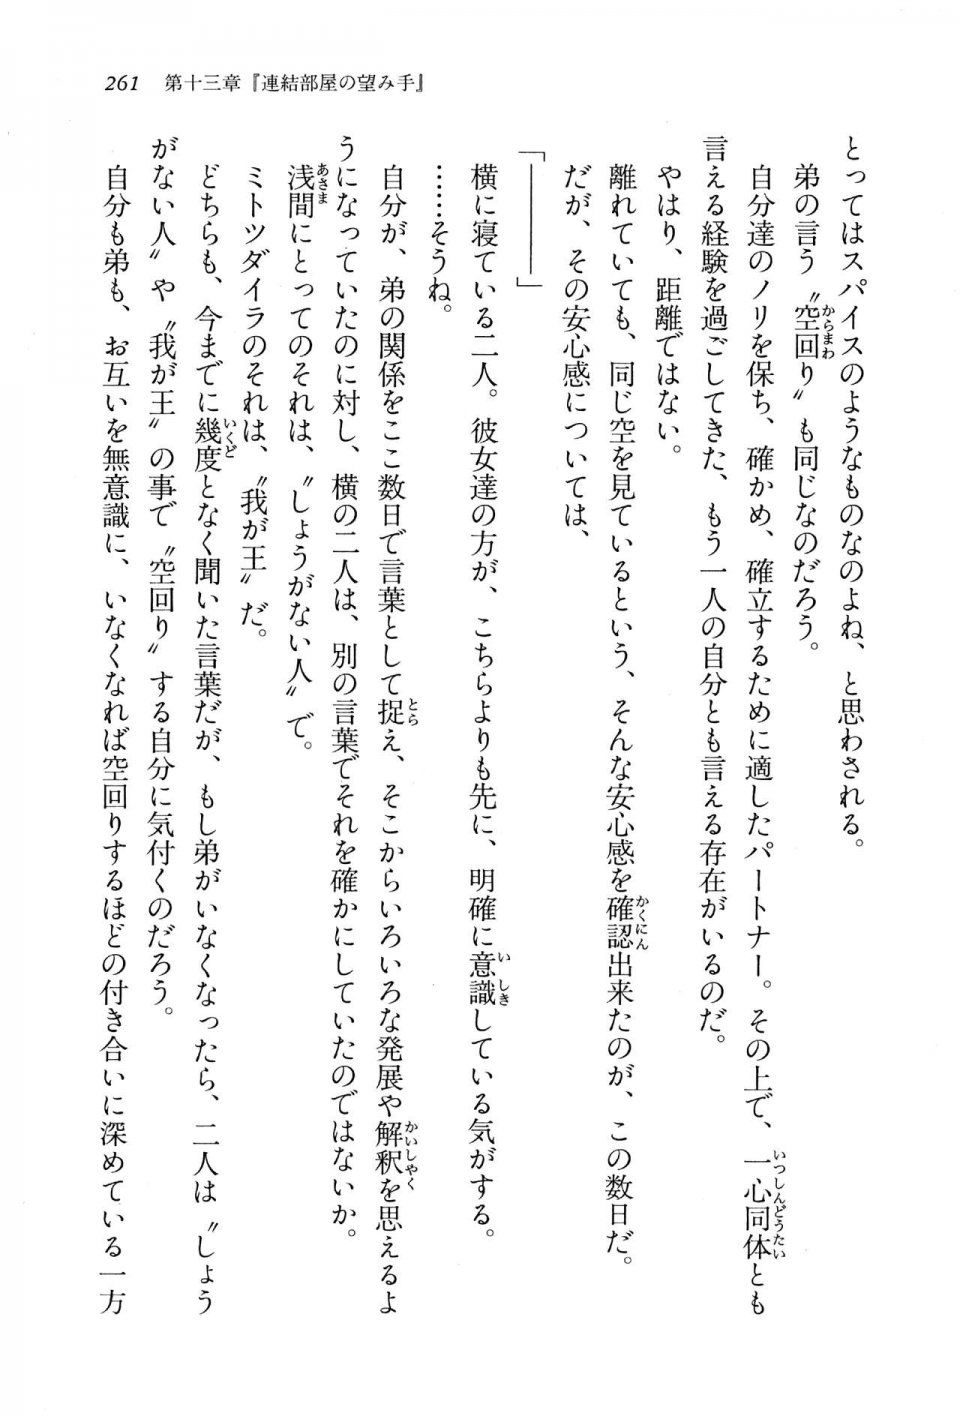 Kyoukai Senjou no Horizon BD Special Mininovel Vol 8(4B) - Photo #265